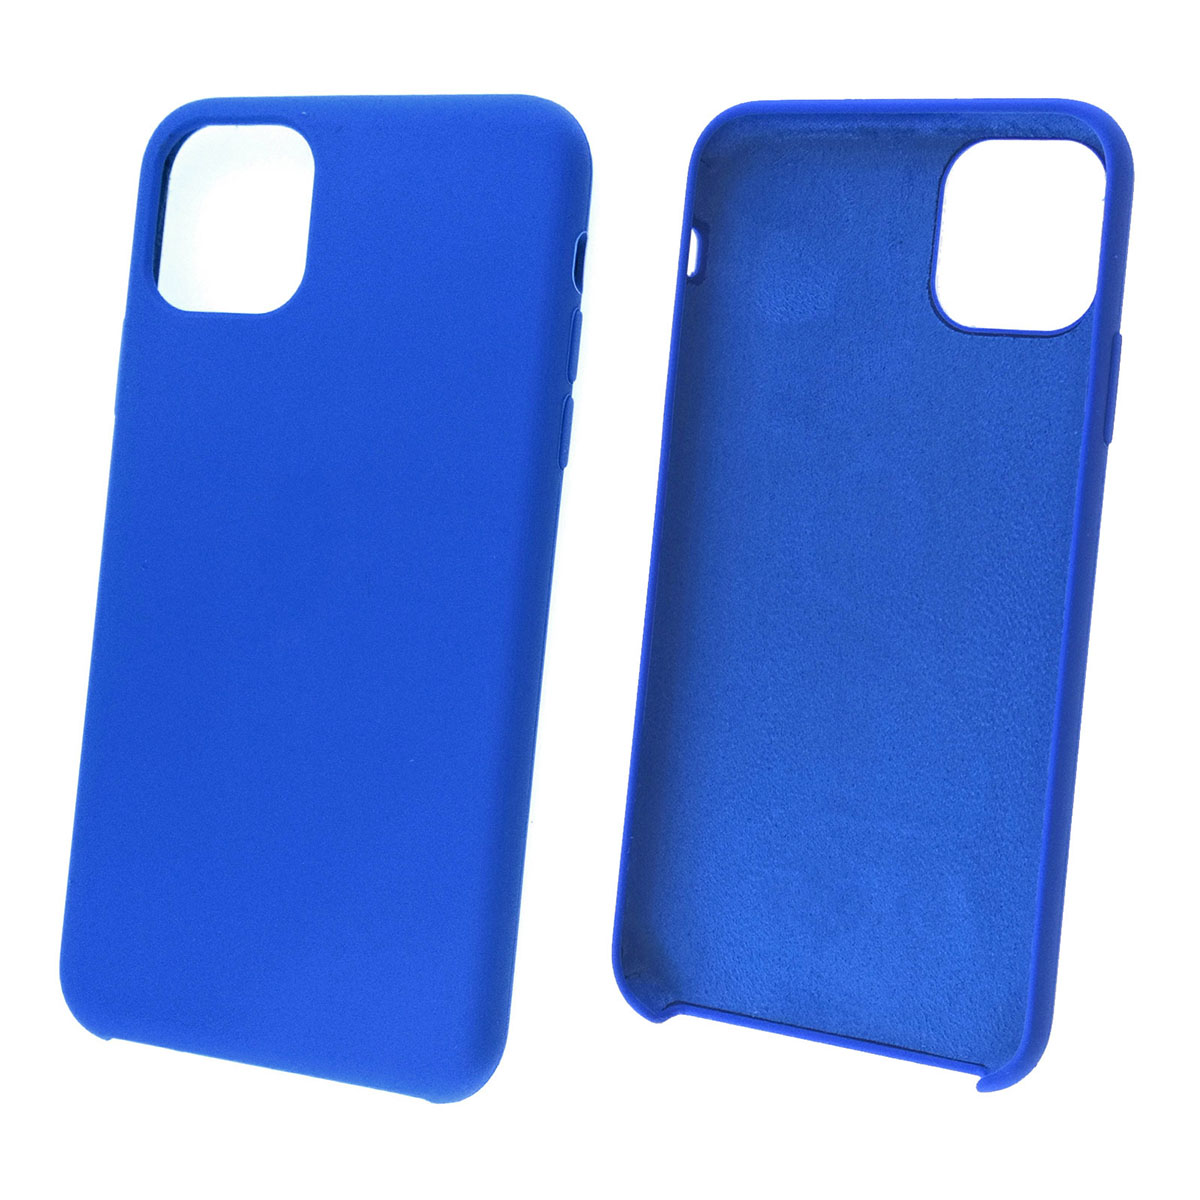 Чехол накладка Silicon Case для APPLE iPhone 11 Pro MAX 2019, силикон, бархат, цвет космический синий.